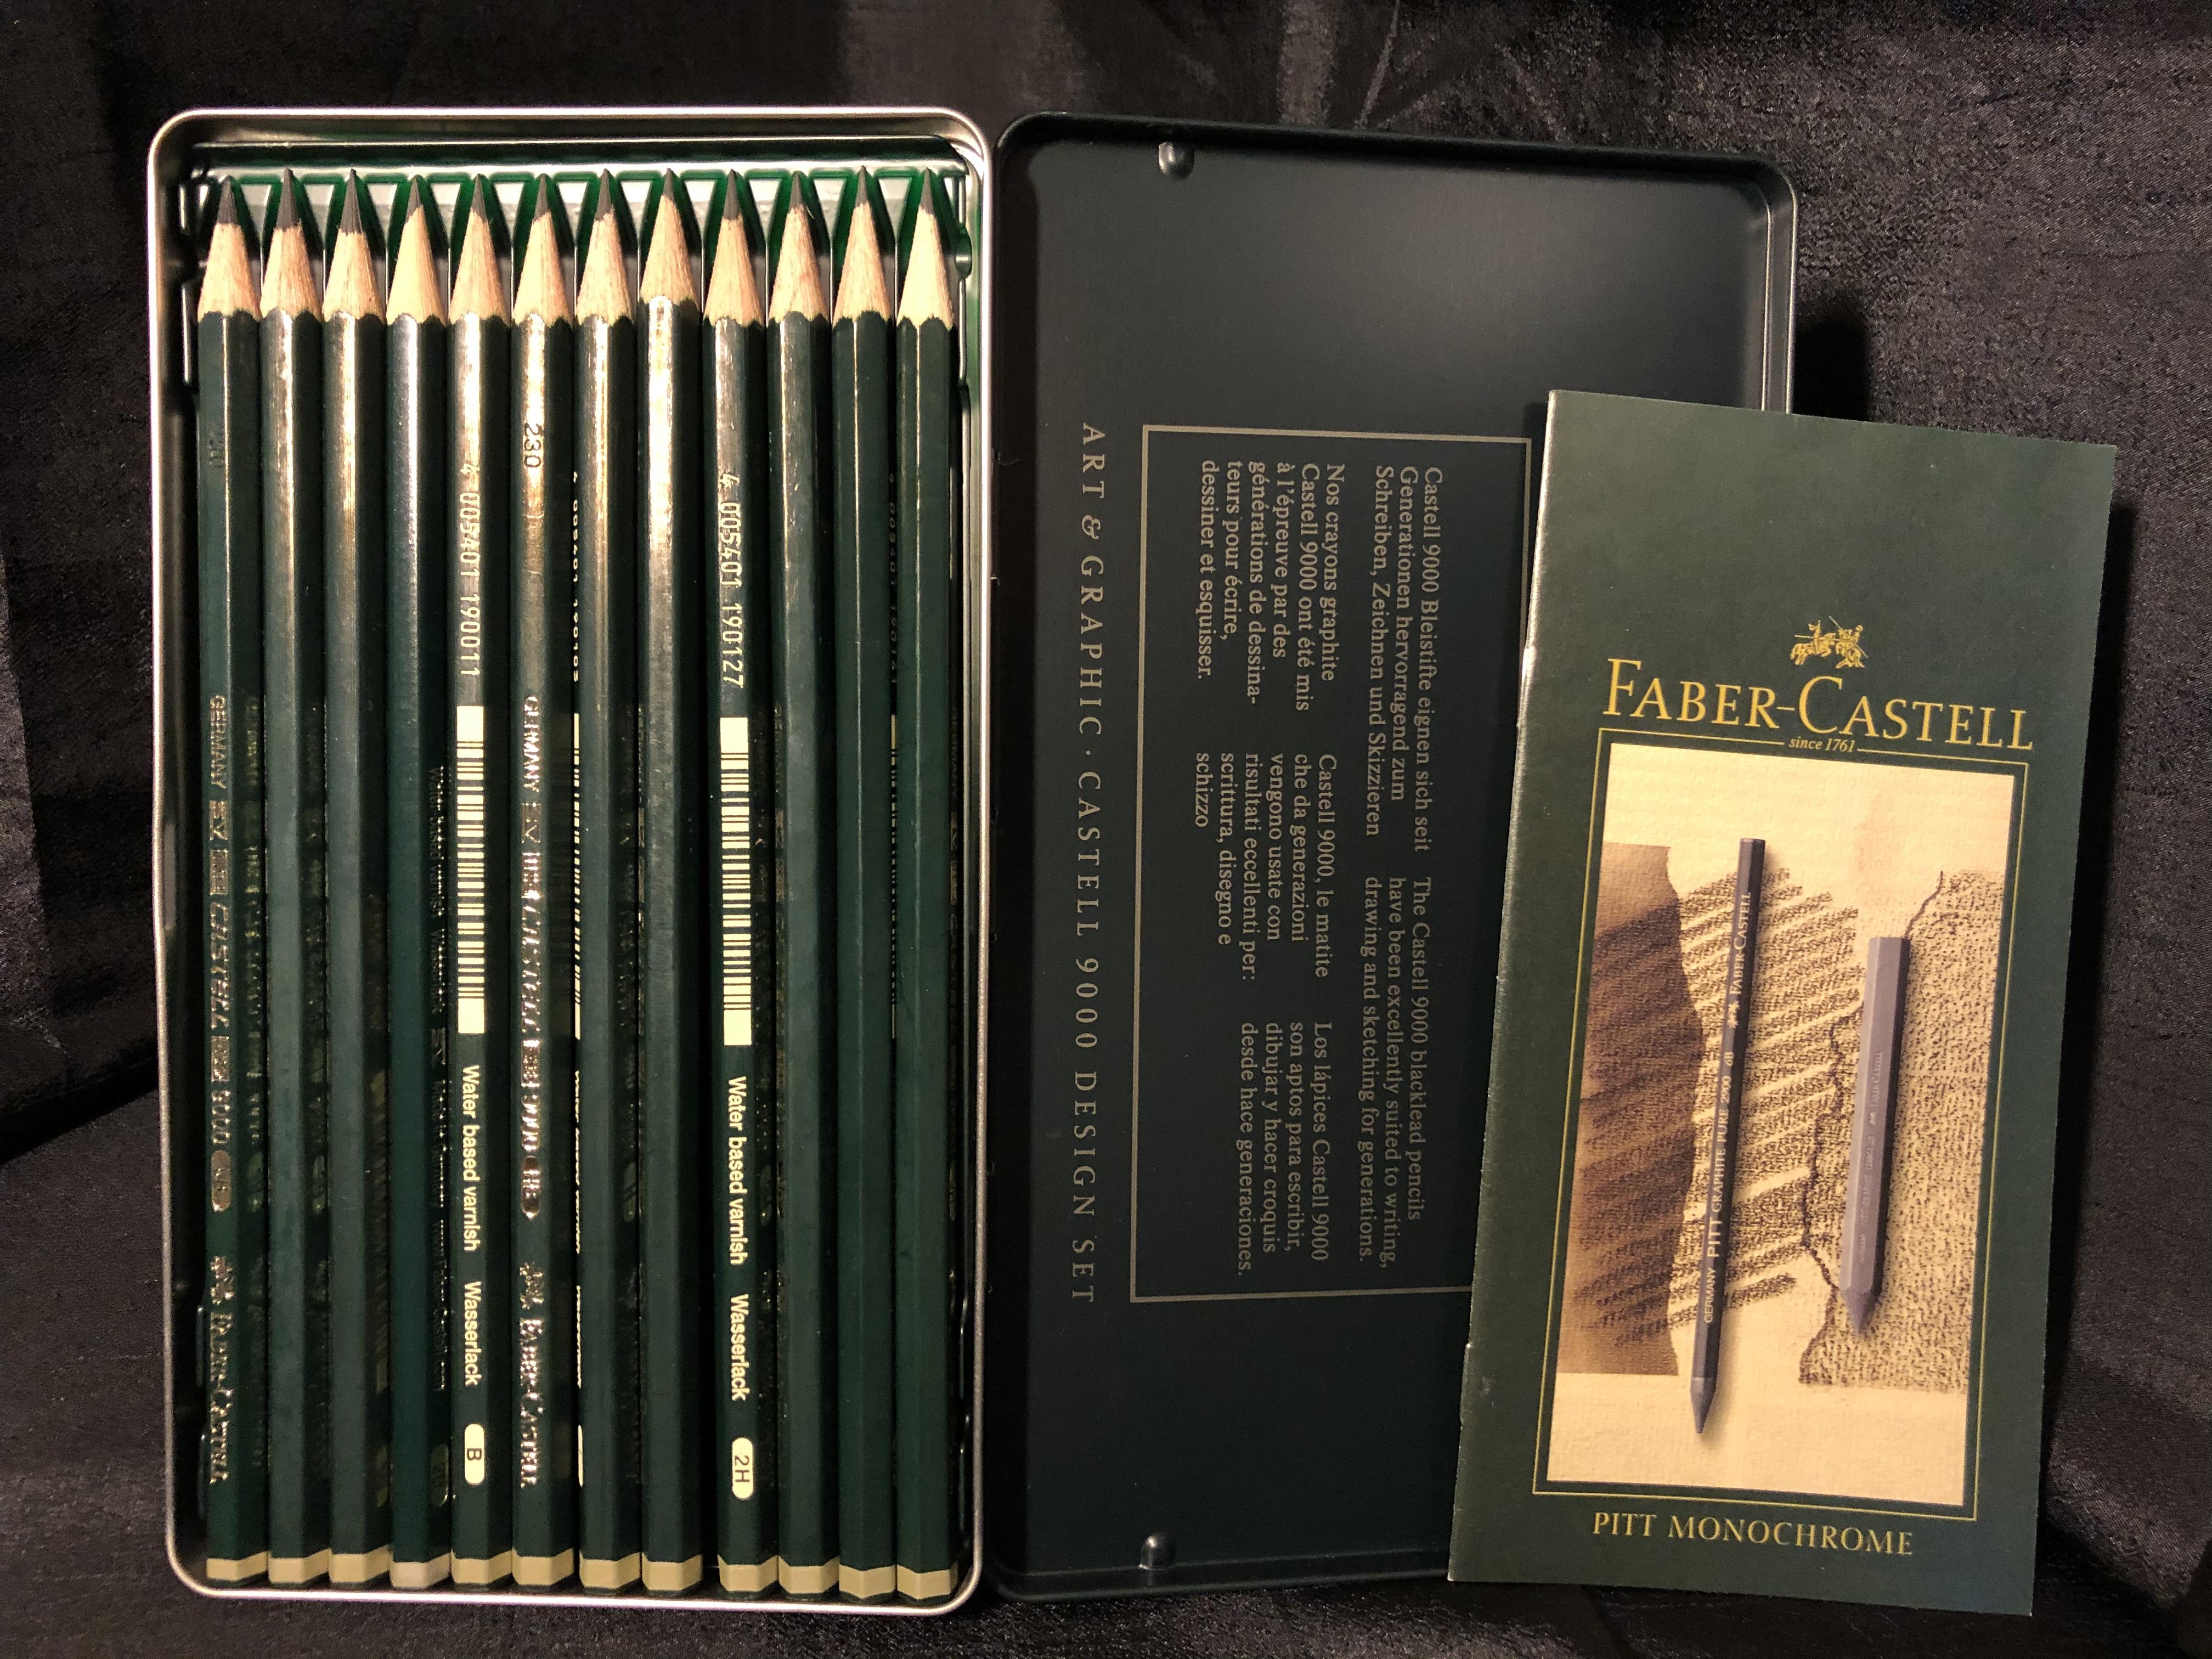 Buy Faber-Castell Pencils, Castell 9000 Artist Graphite 2H Pencils